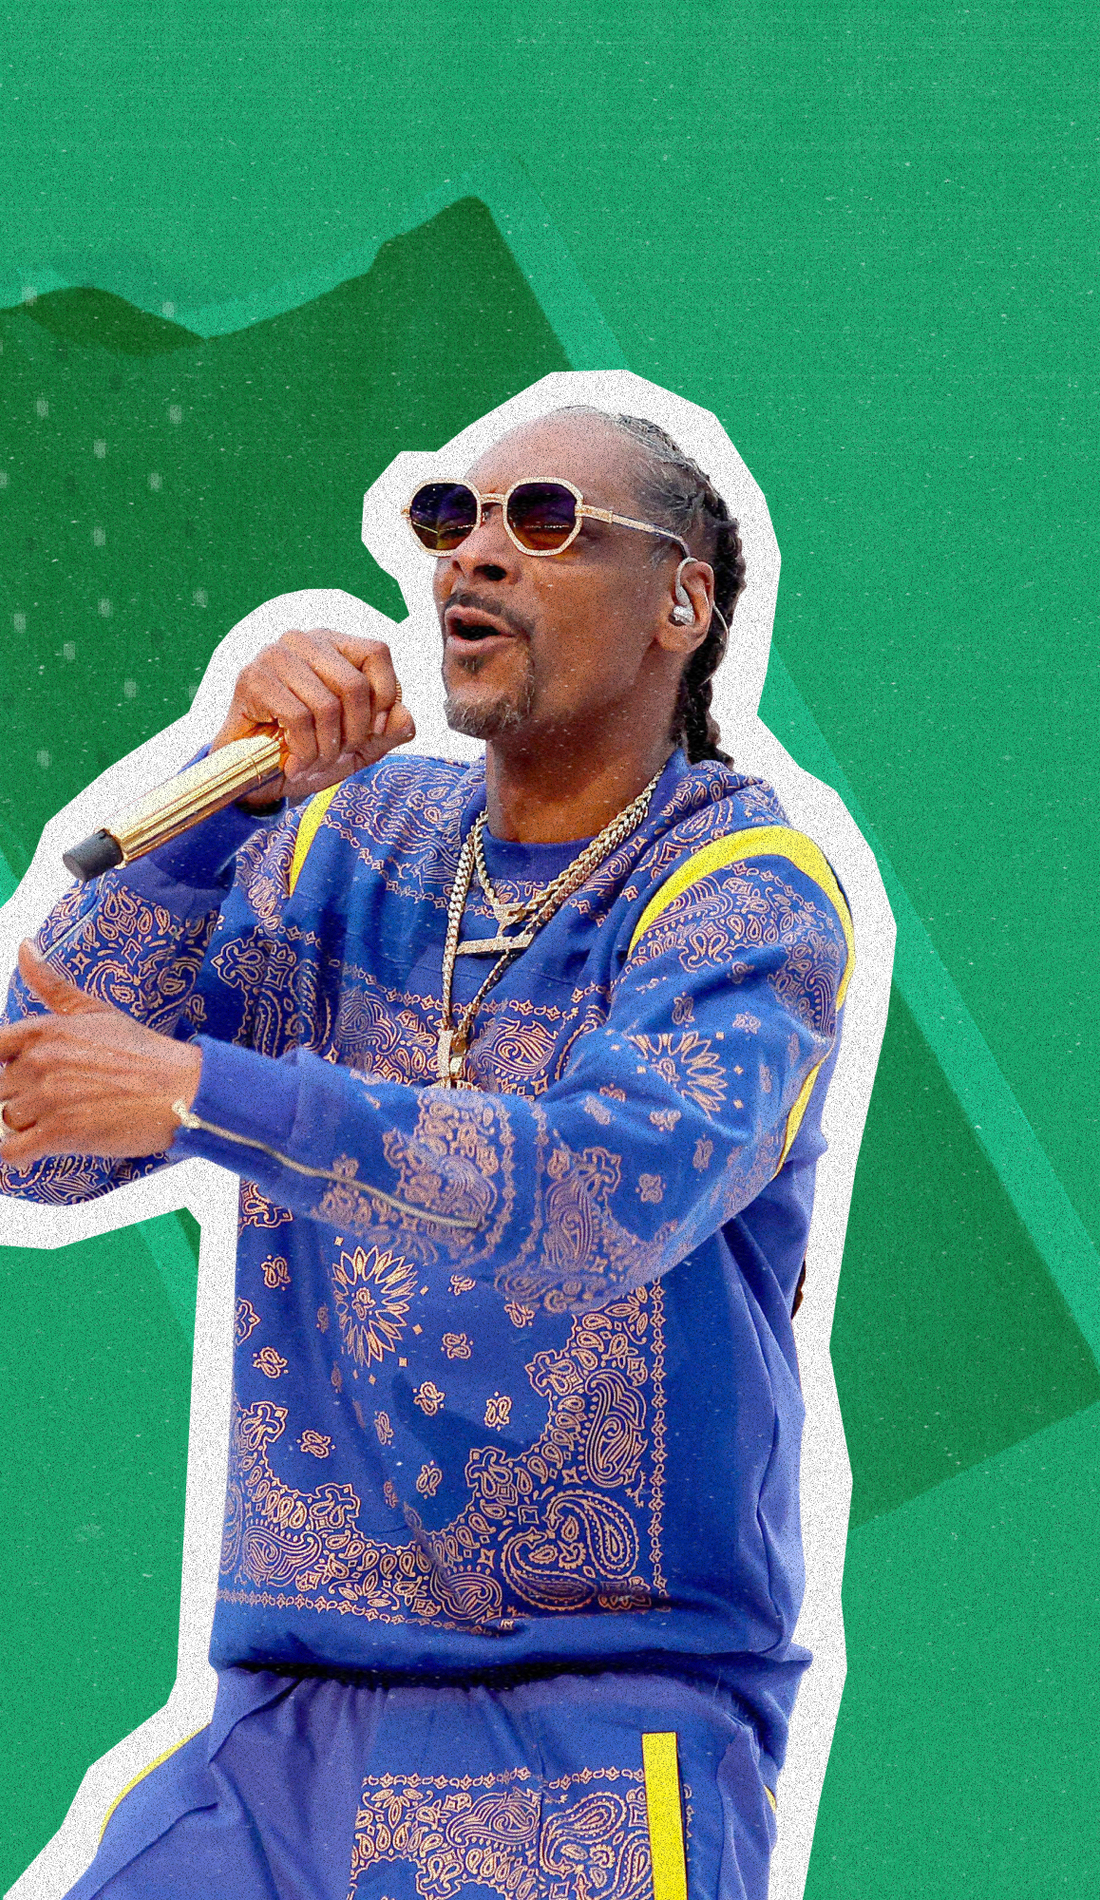 A Snoop Dogg live event